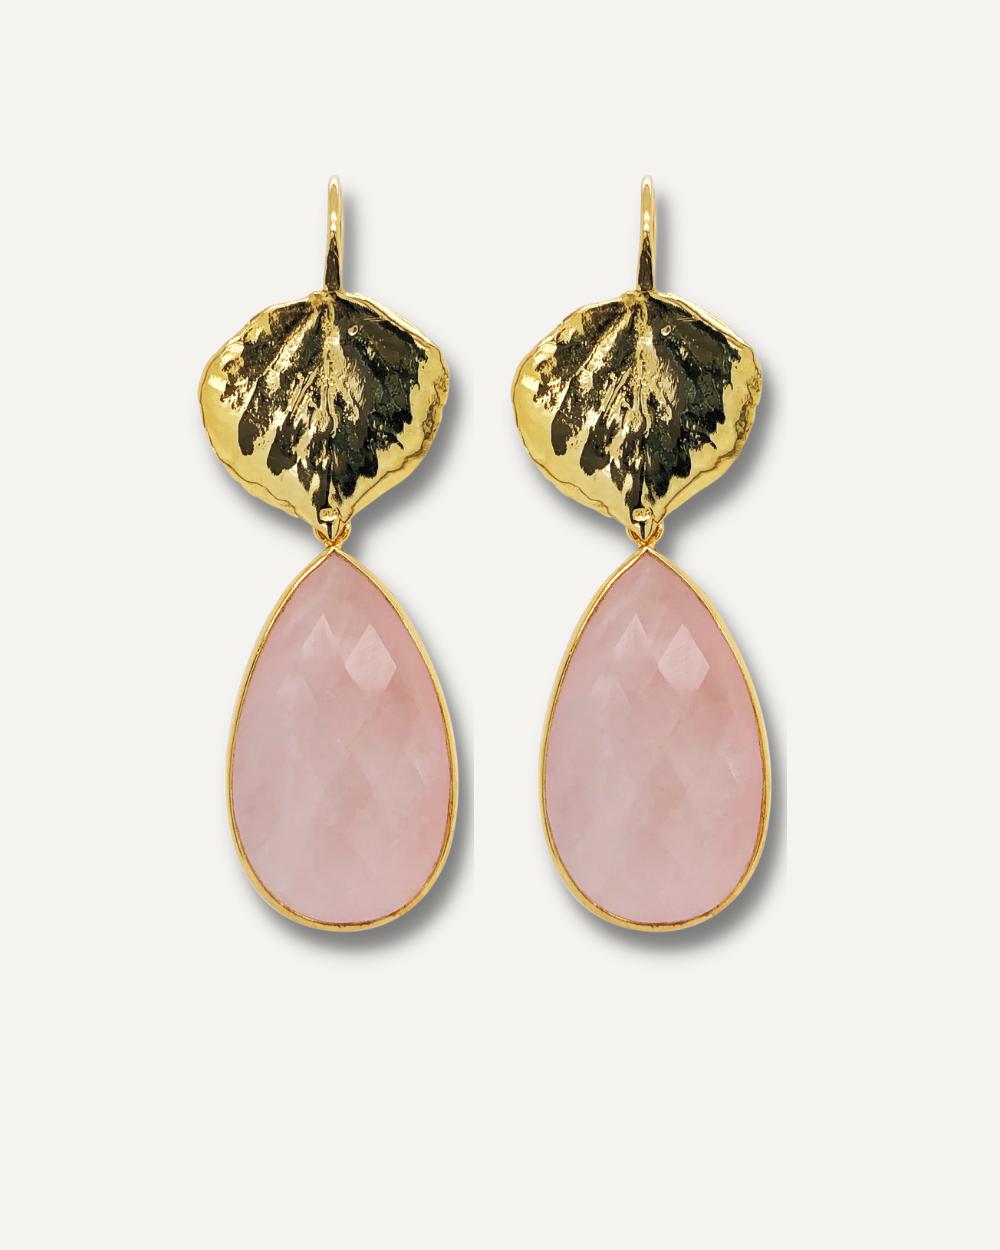 Gemstone dangle earrings with rose quartz stones.